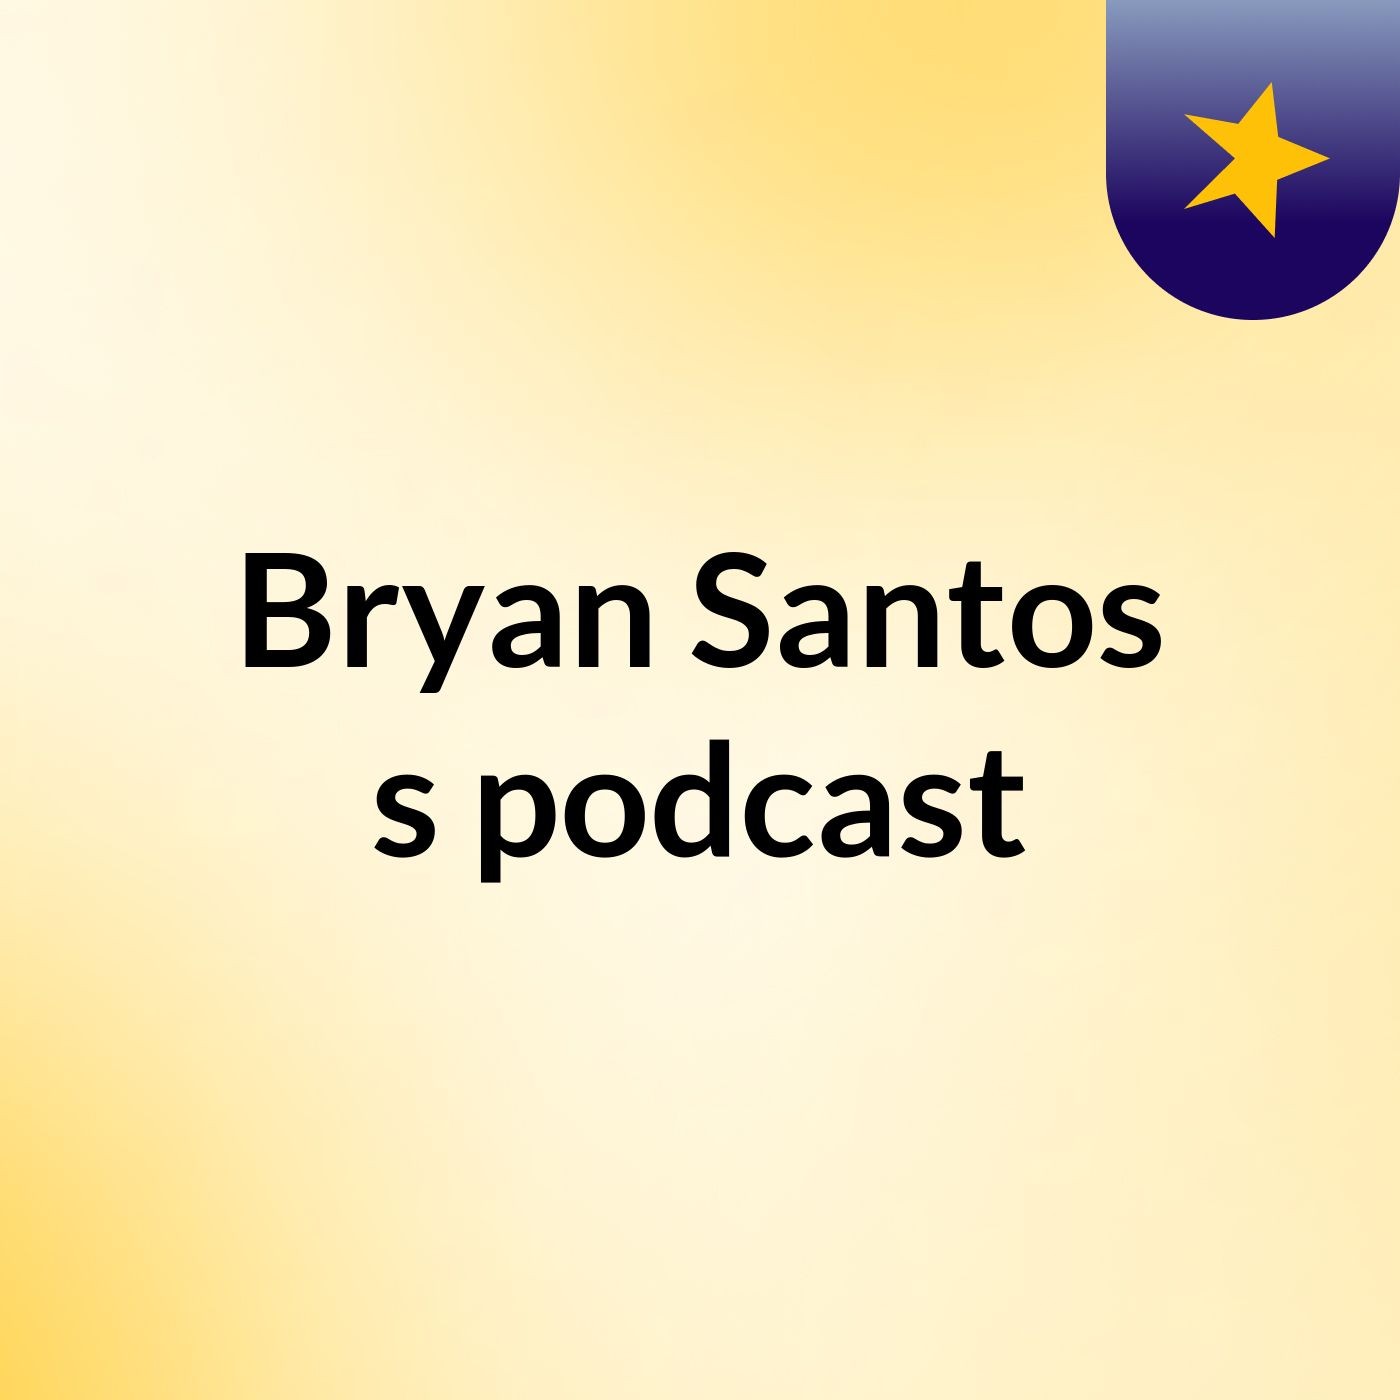 Bryan Santos's podcast